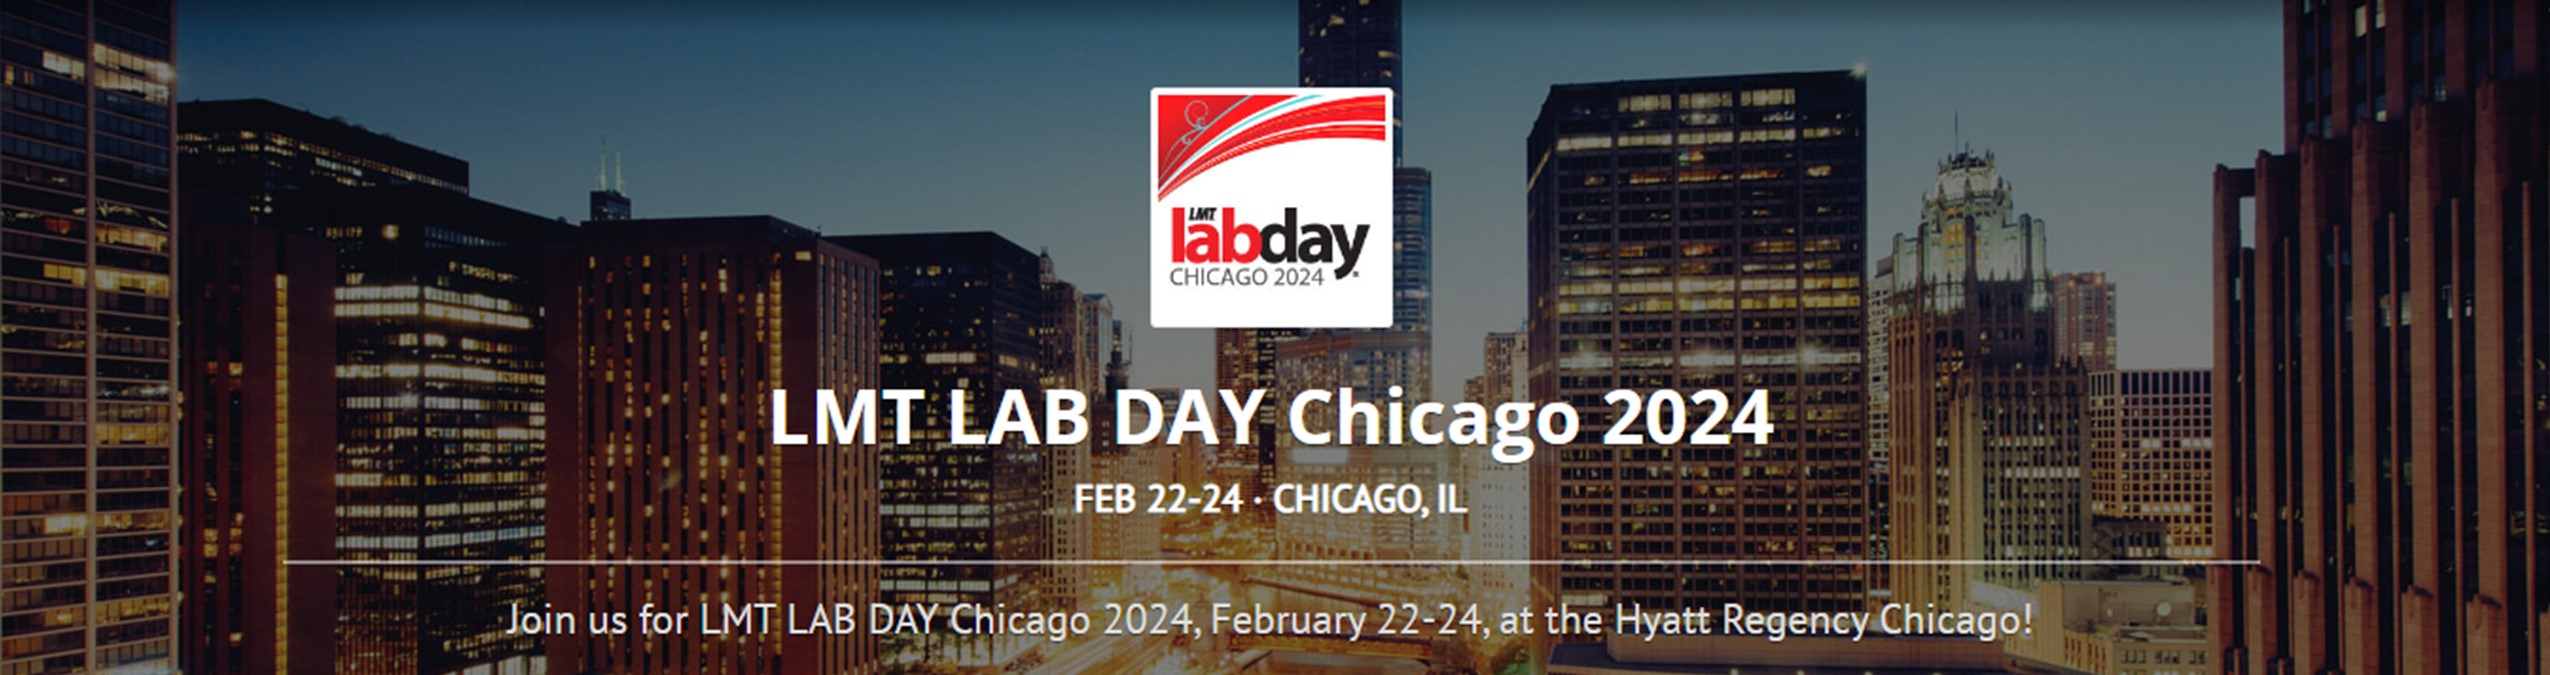 Lab Day Chicago 2024